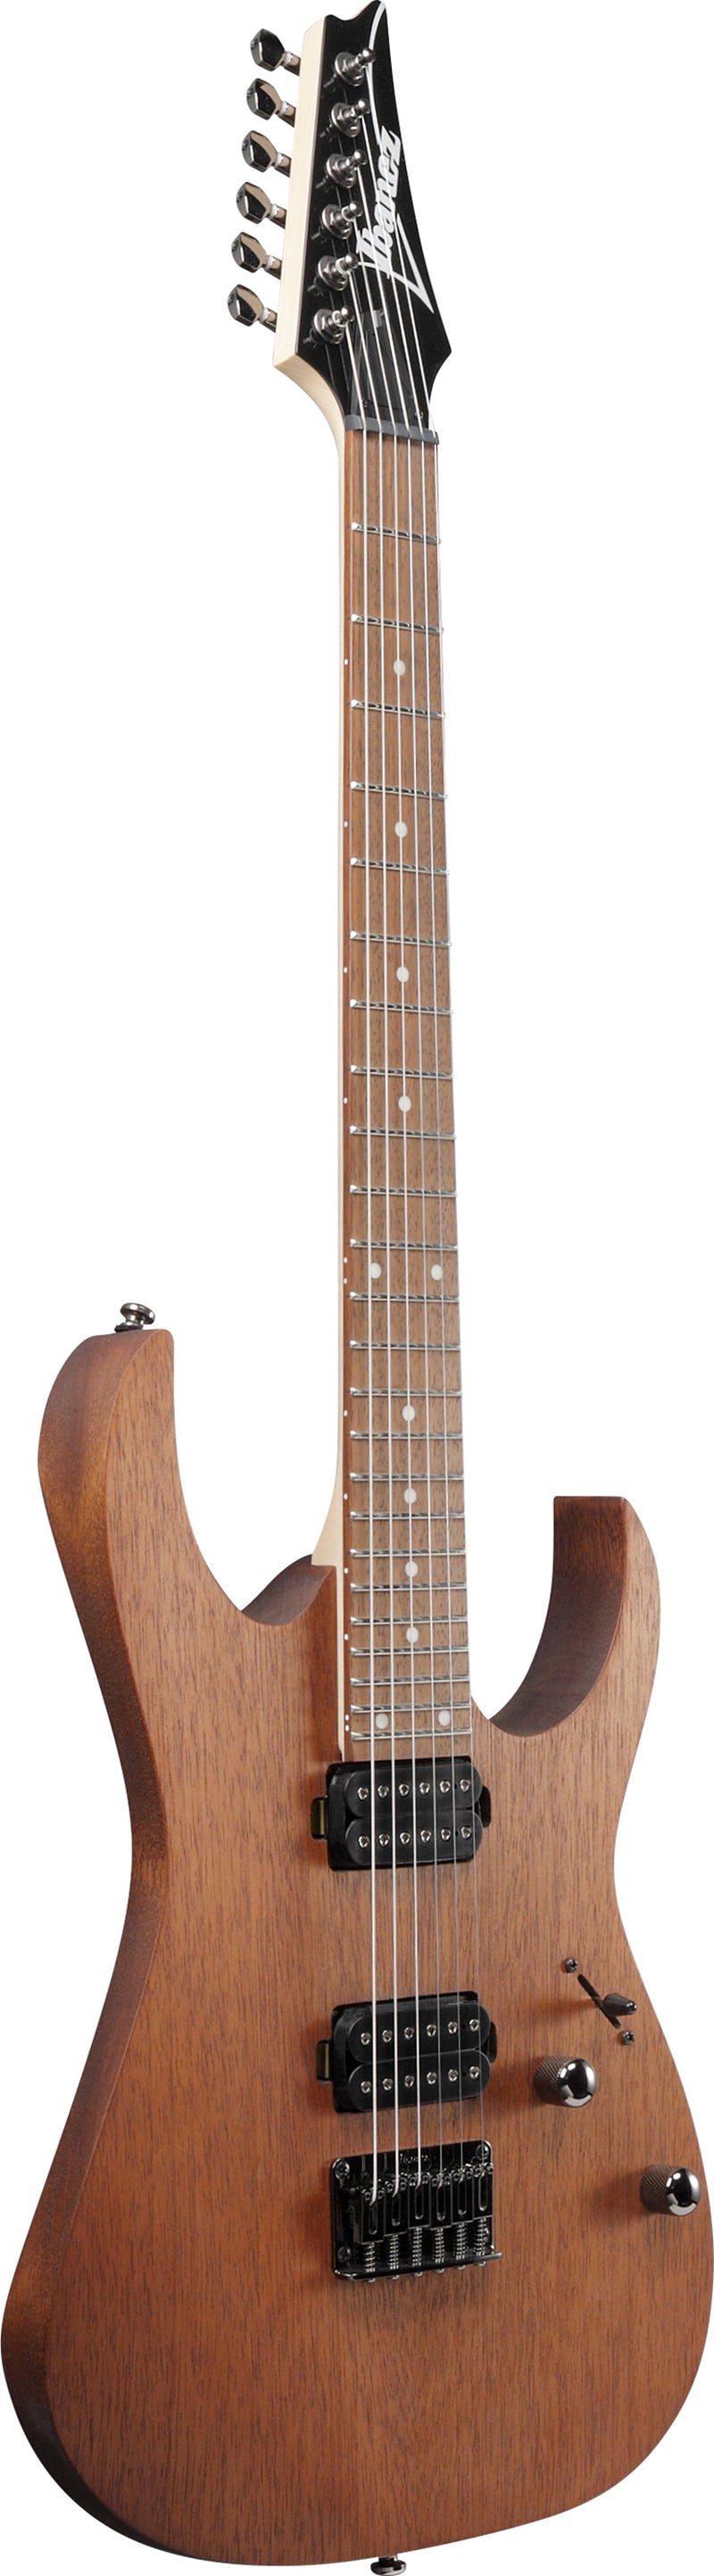 Ibanez RG Standard Electric Guitar (Mahogany Oil)